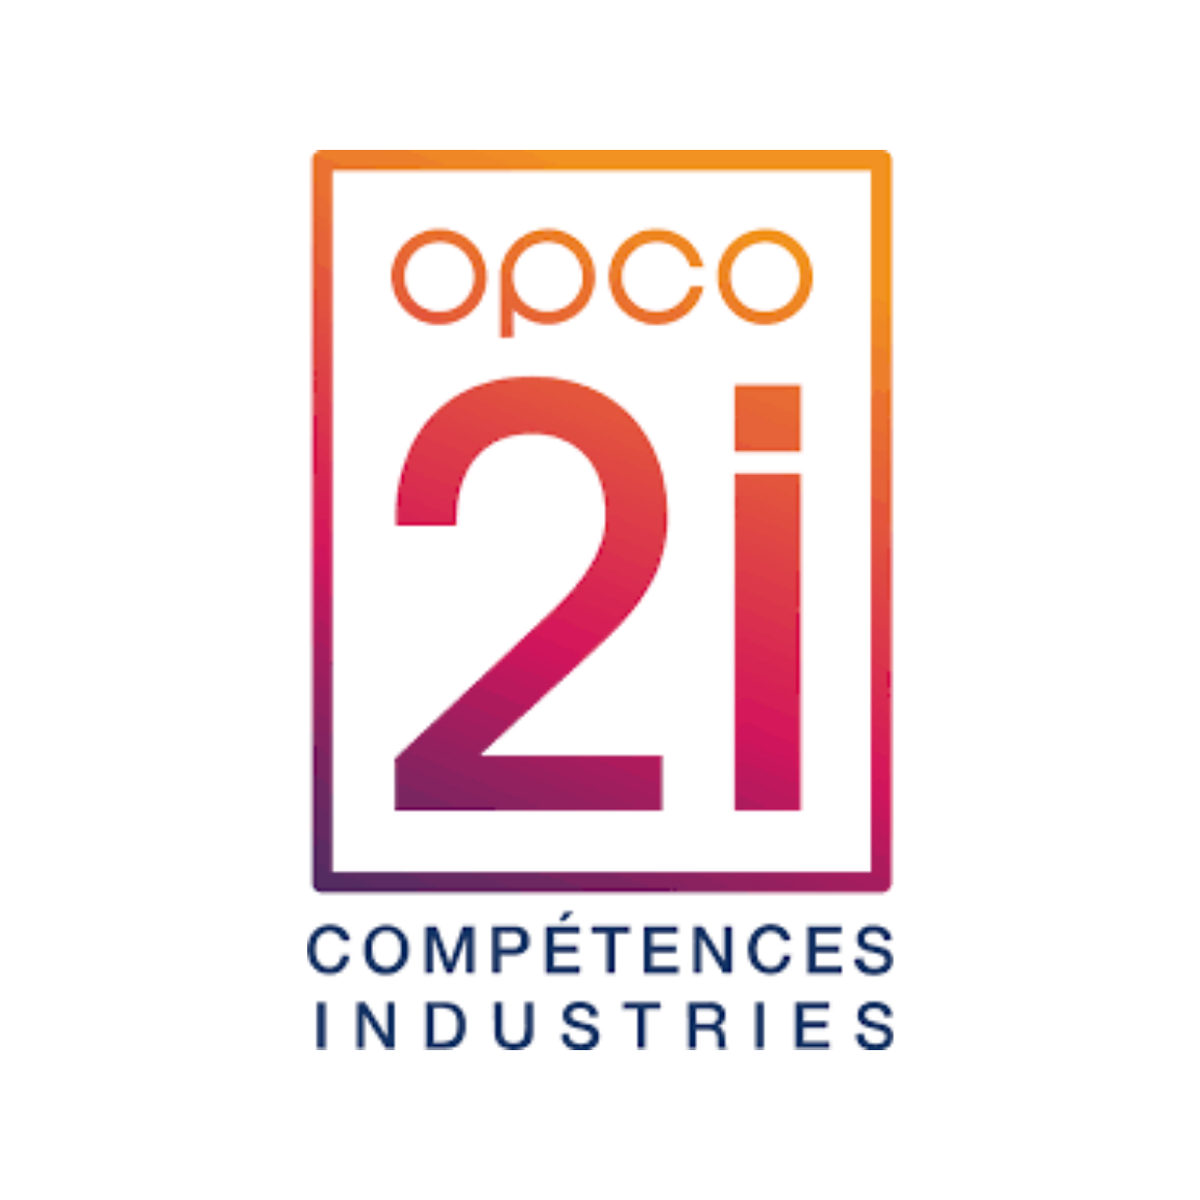 opco2i logo réseau